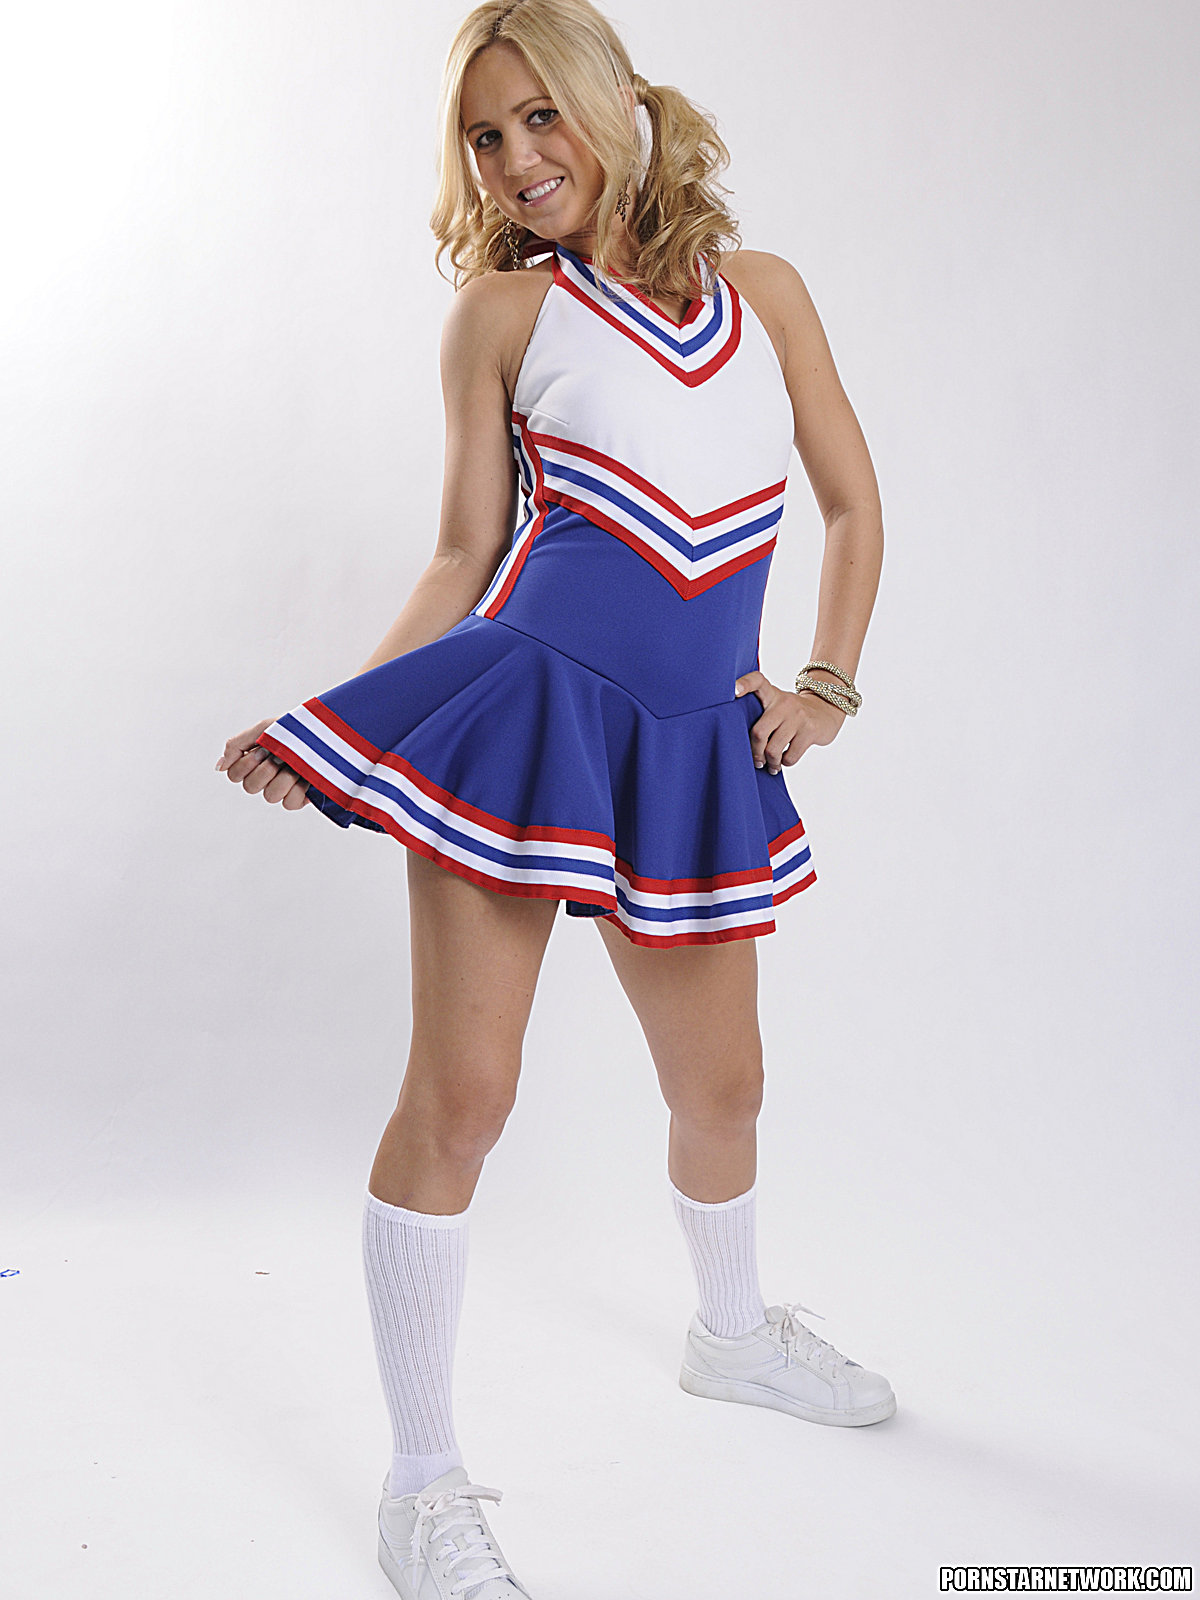 Ashley Abott and Missy Maze - Cheerleader Truth or Dare 58633